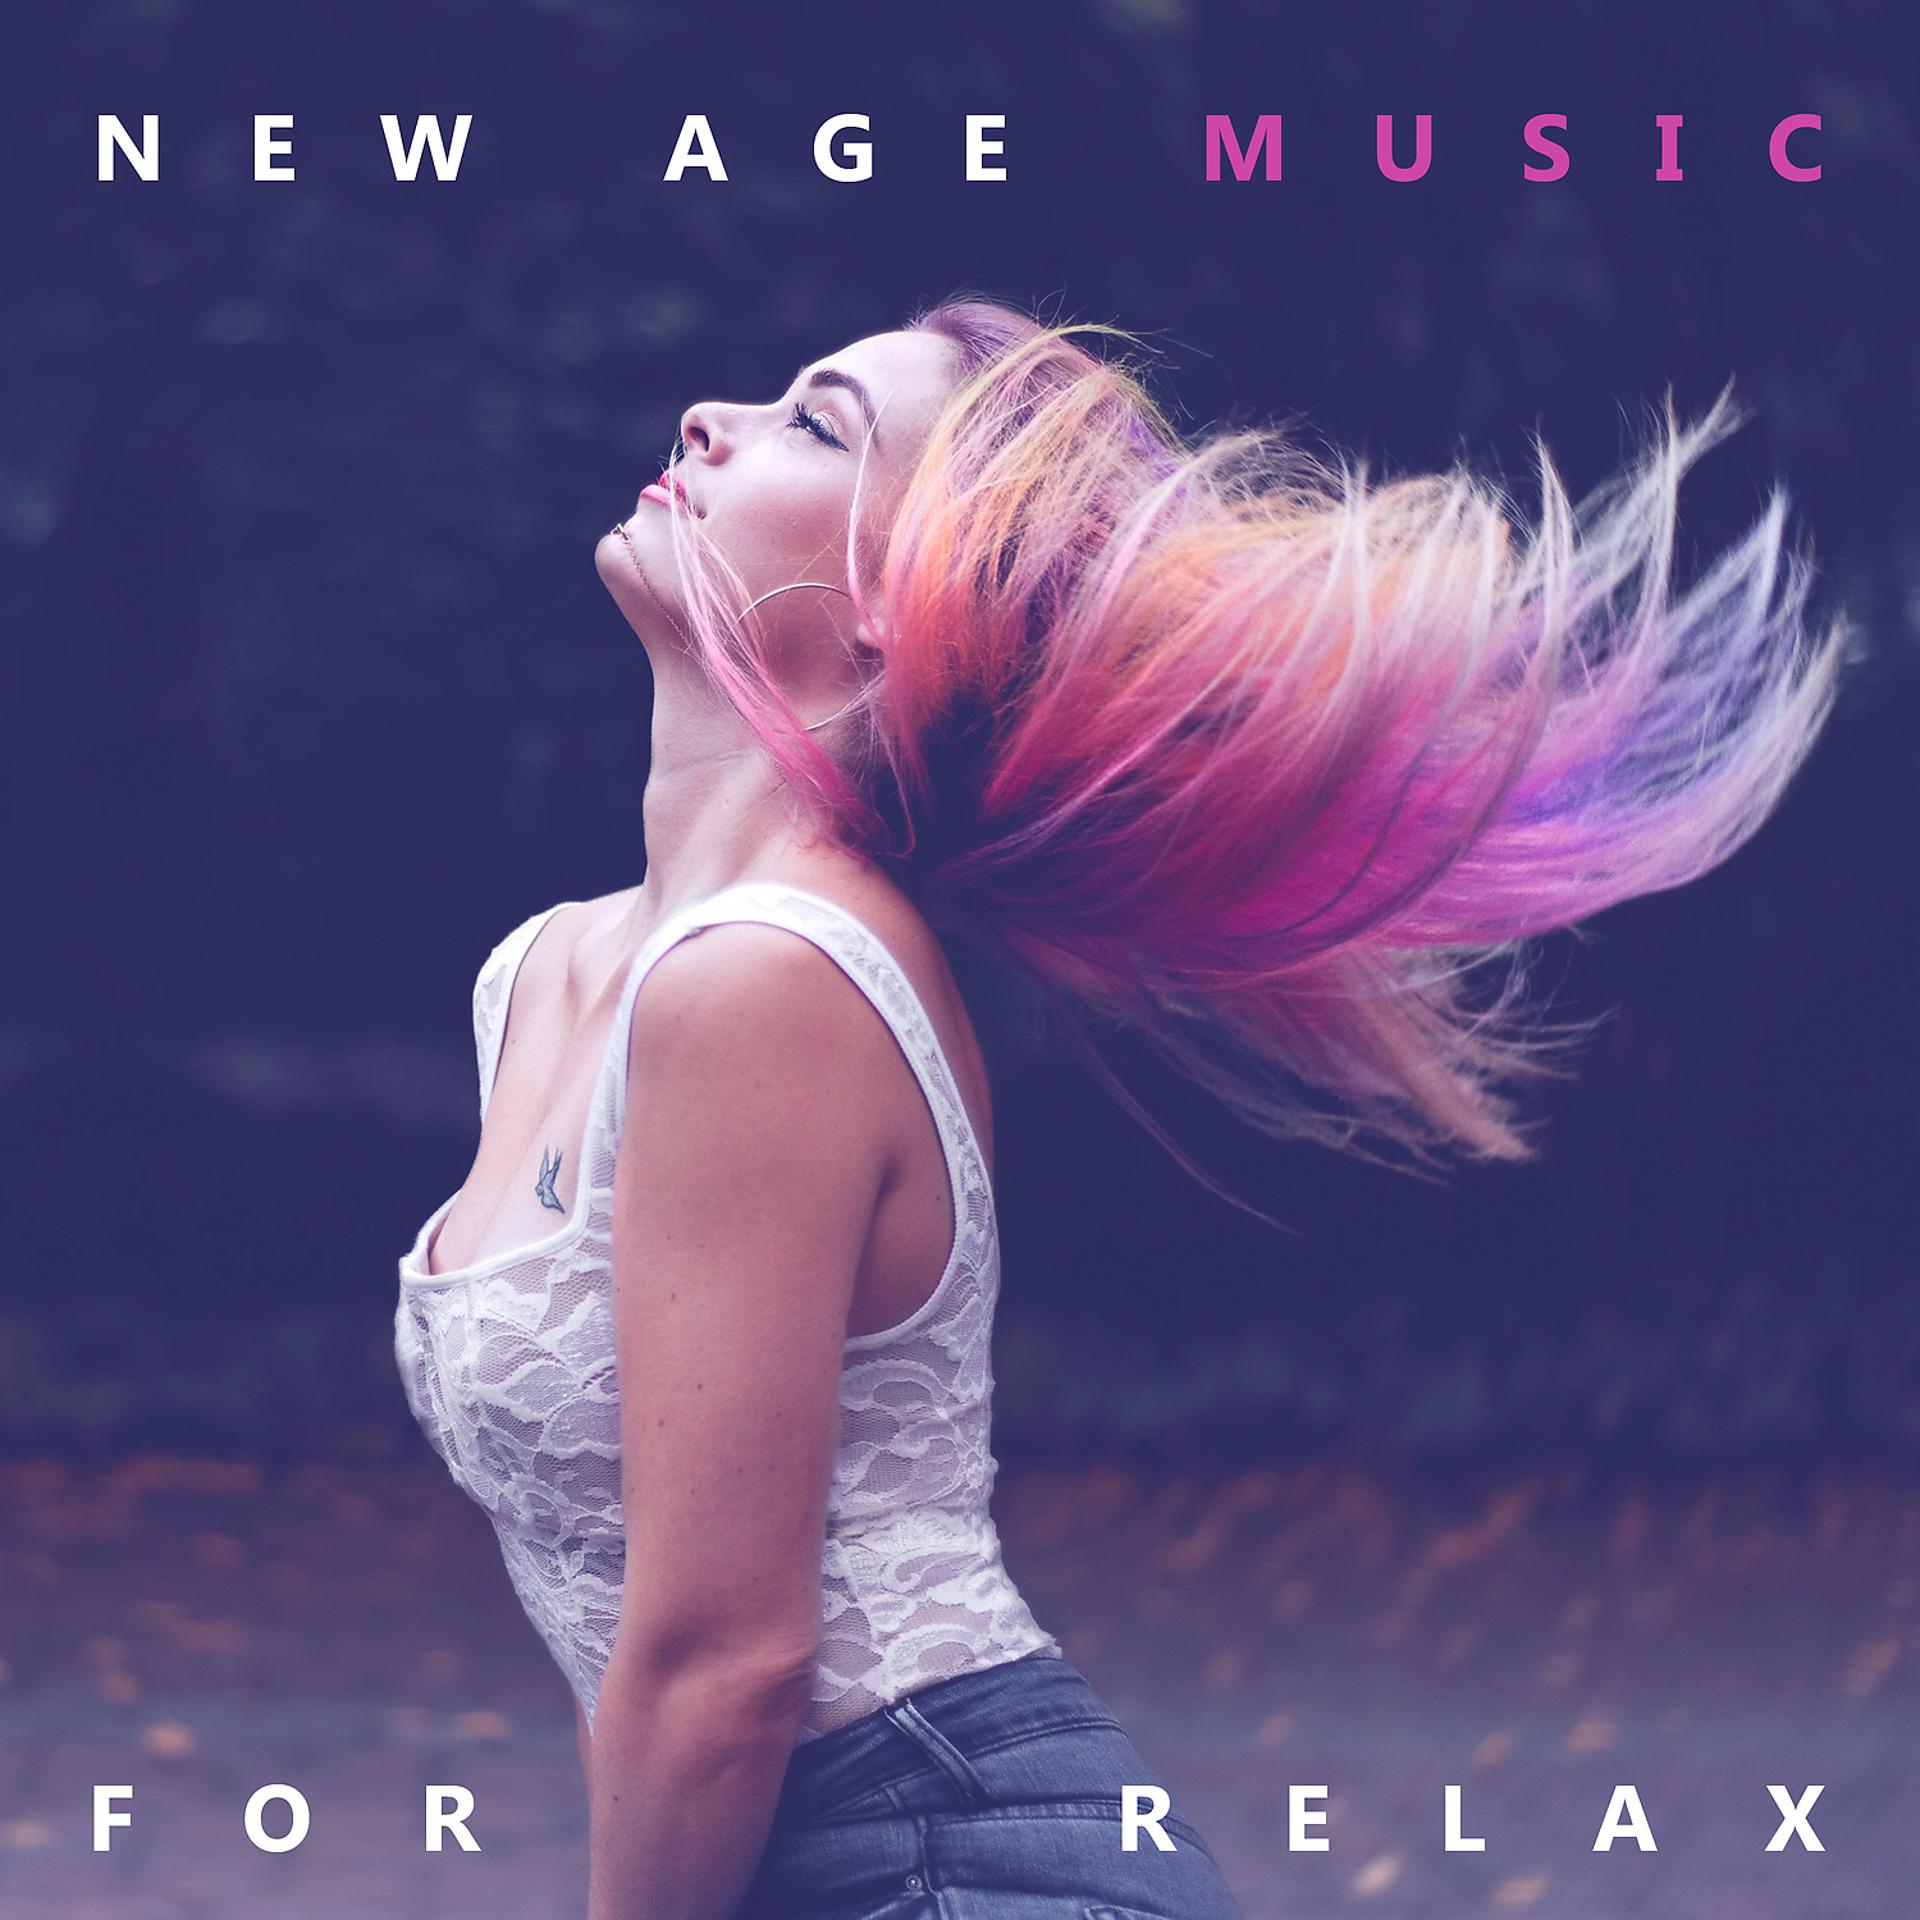 Музыка new age. "Нью-эйдж". New age музыка обложки альбомов. Dazelee New age. Enza музыкант New age.